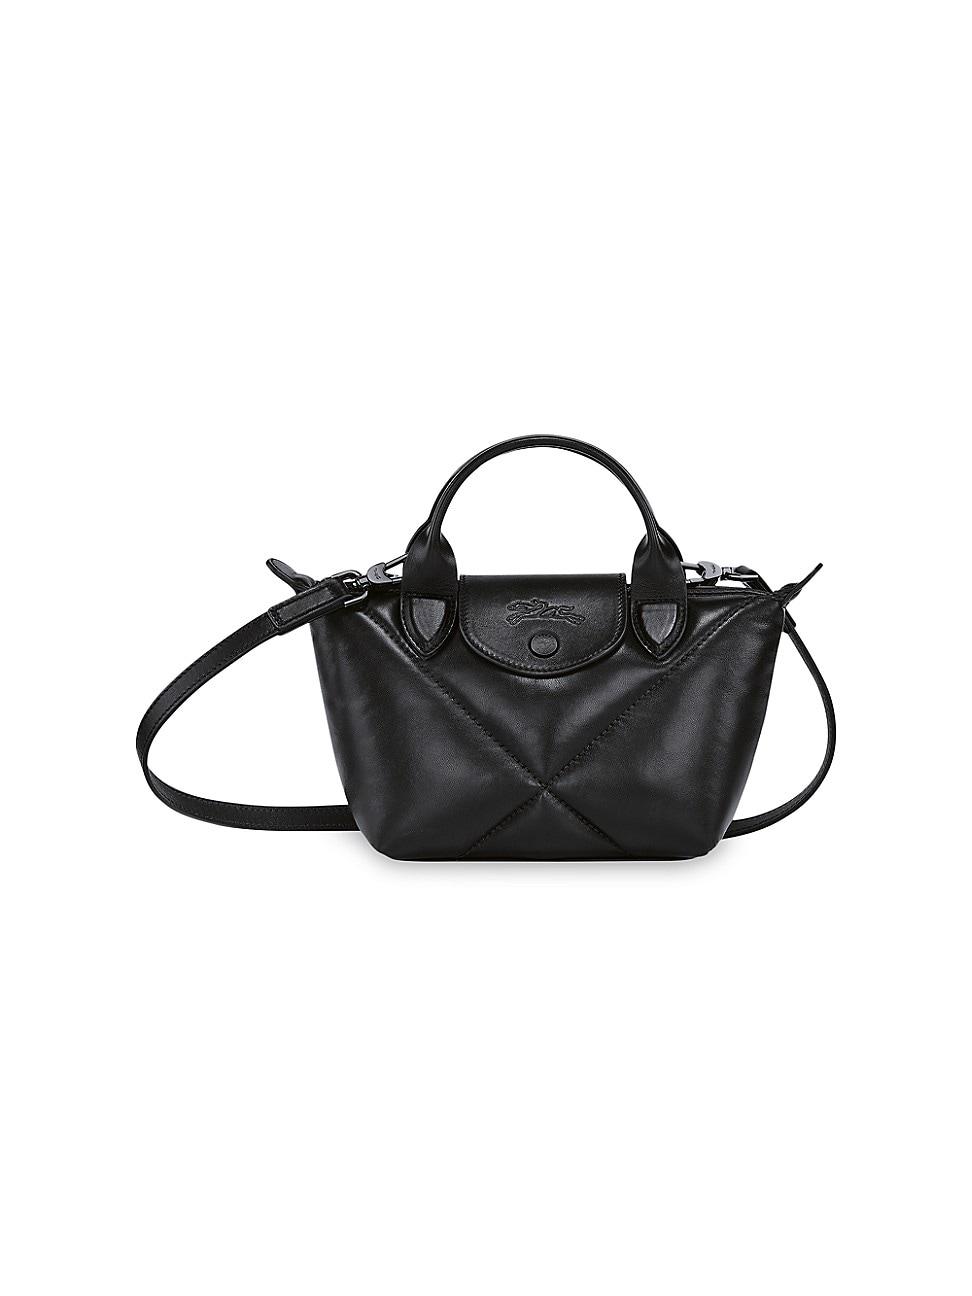 Longchamp Leather Le Pliage Cuir Doudoune Xs Handbag With Strap in Black |  Lyst